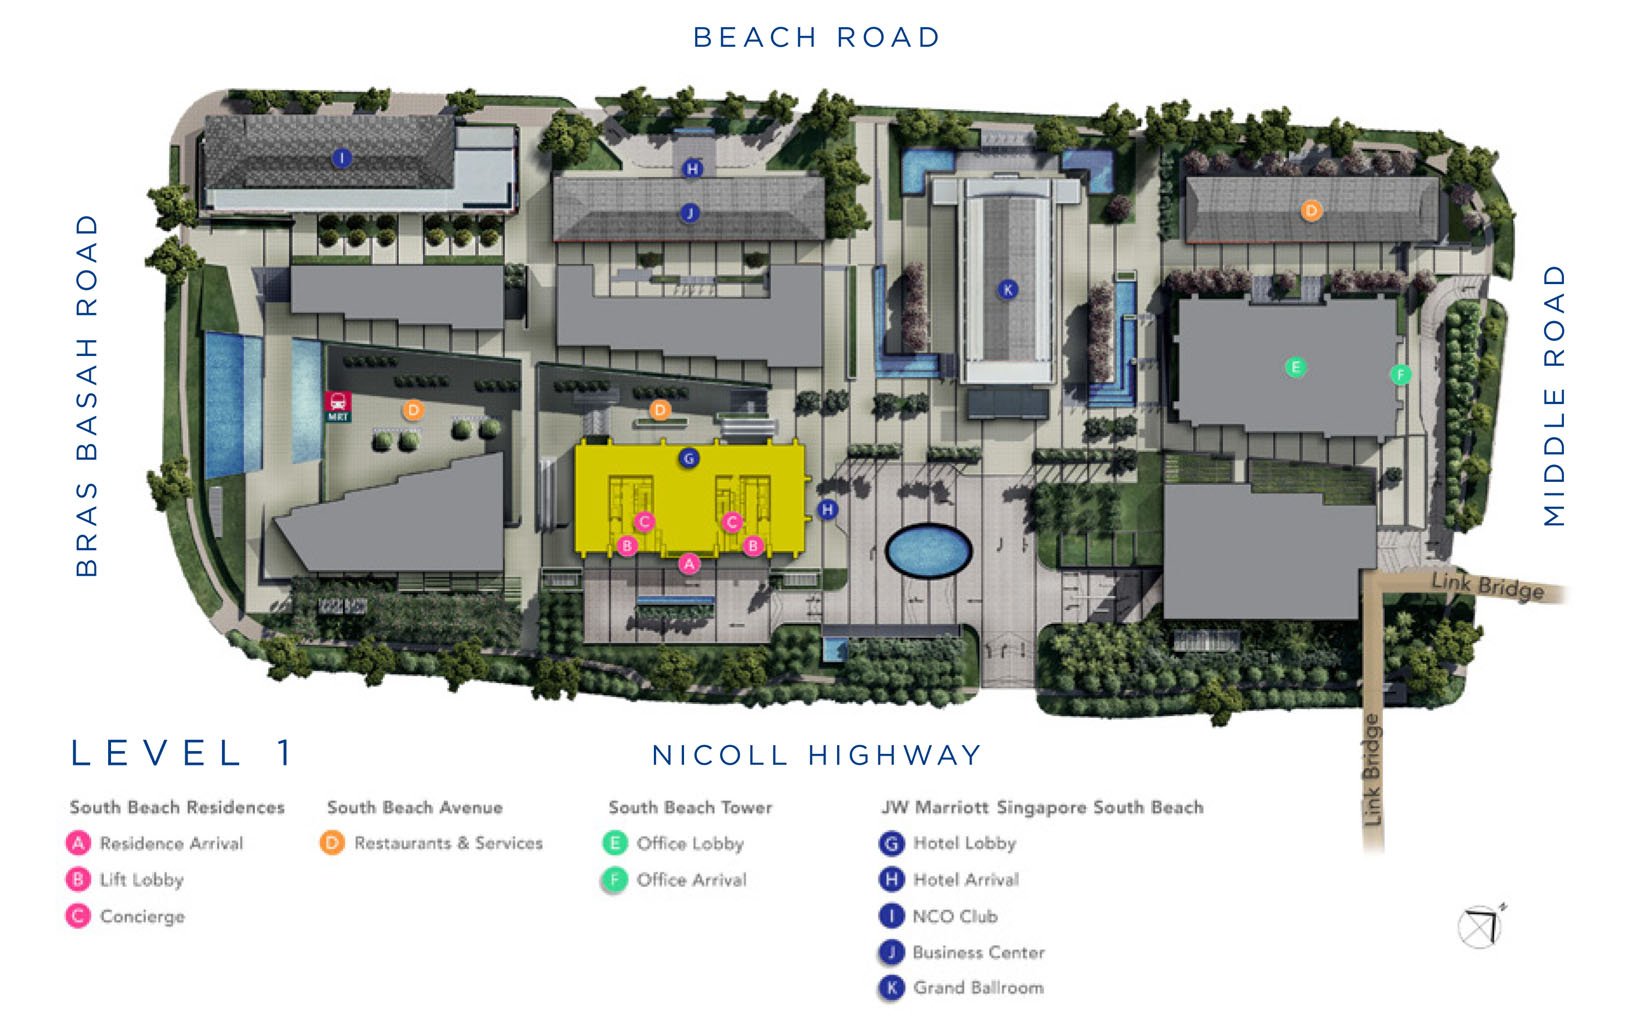 South Beach Residences - Level 1